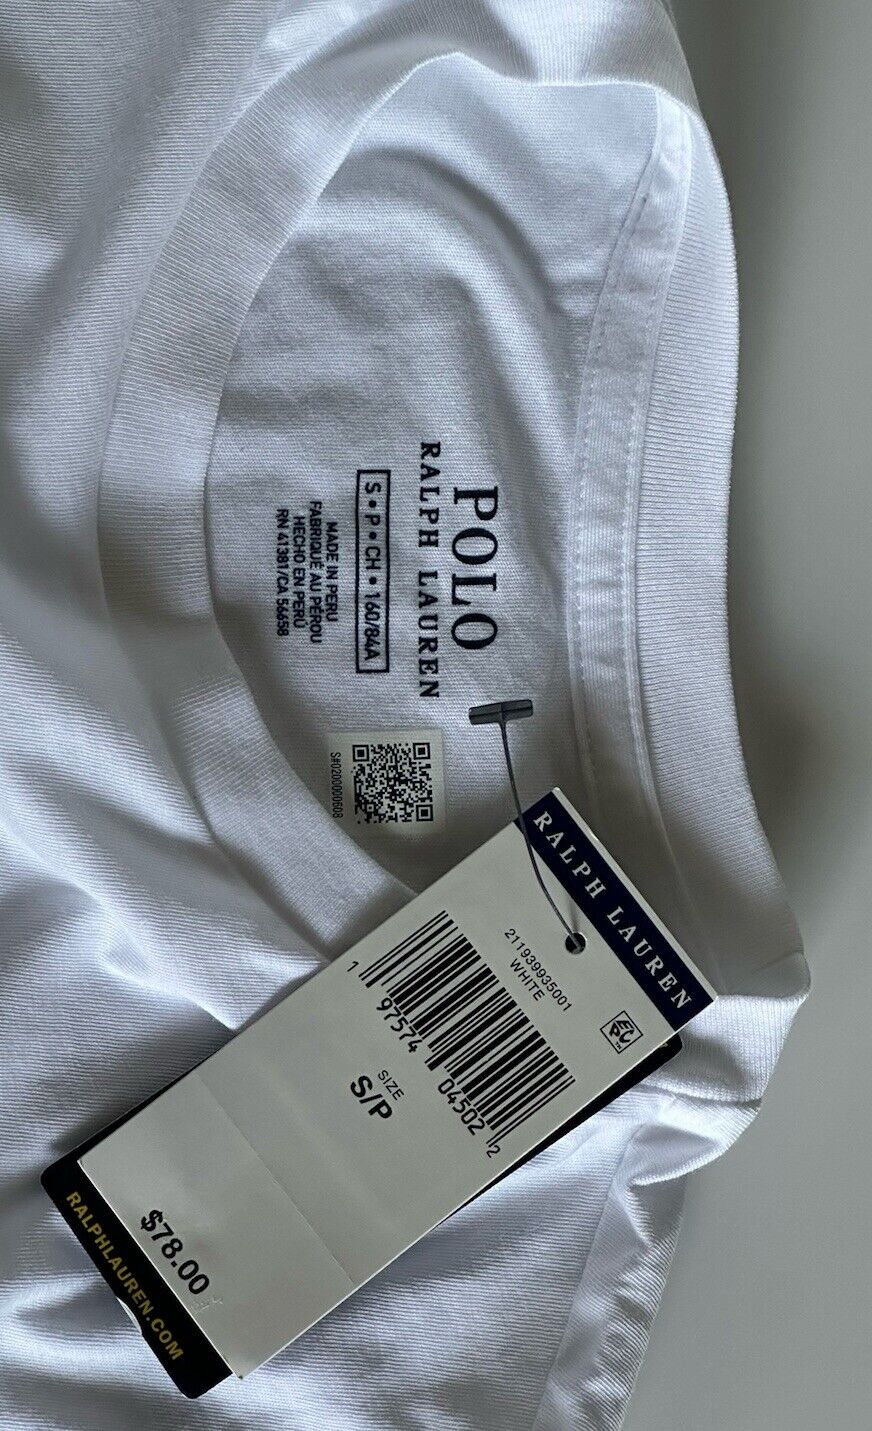 NWT $78 Polo Ralph Lauren Флаг США Белая футболка с короткими рукавами Топ Маленький